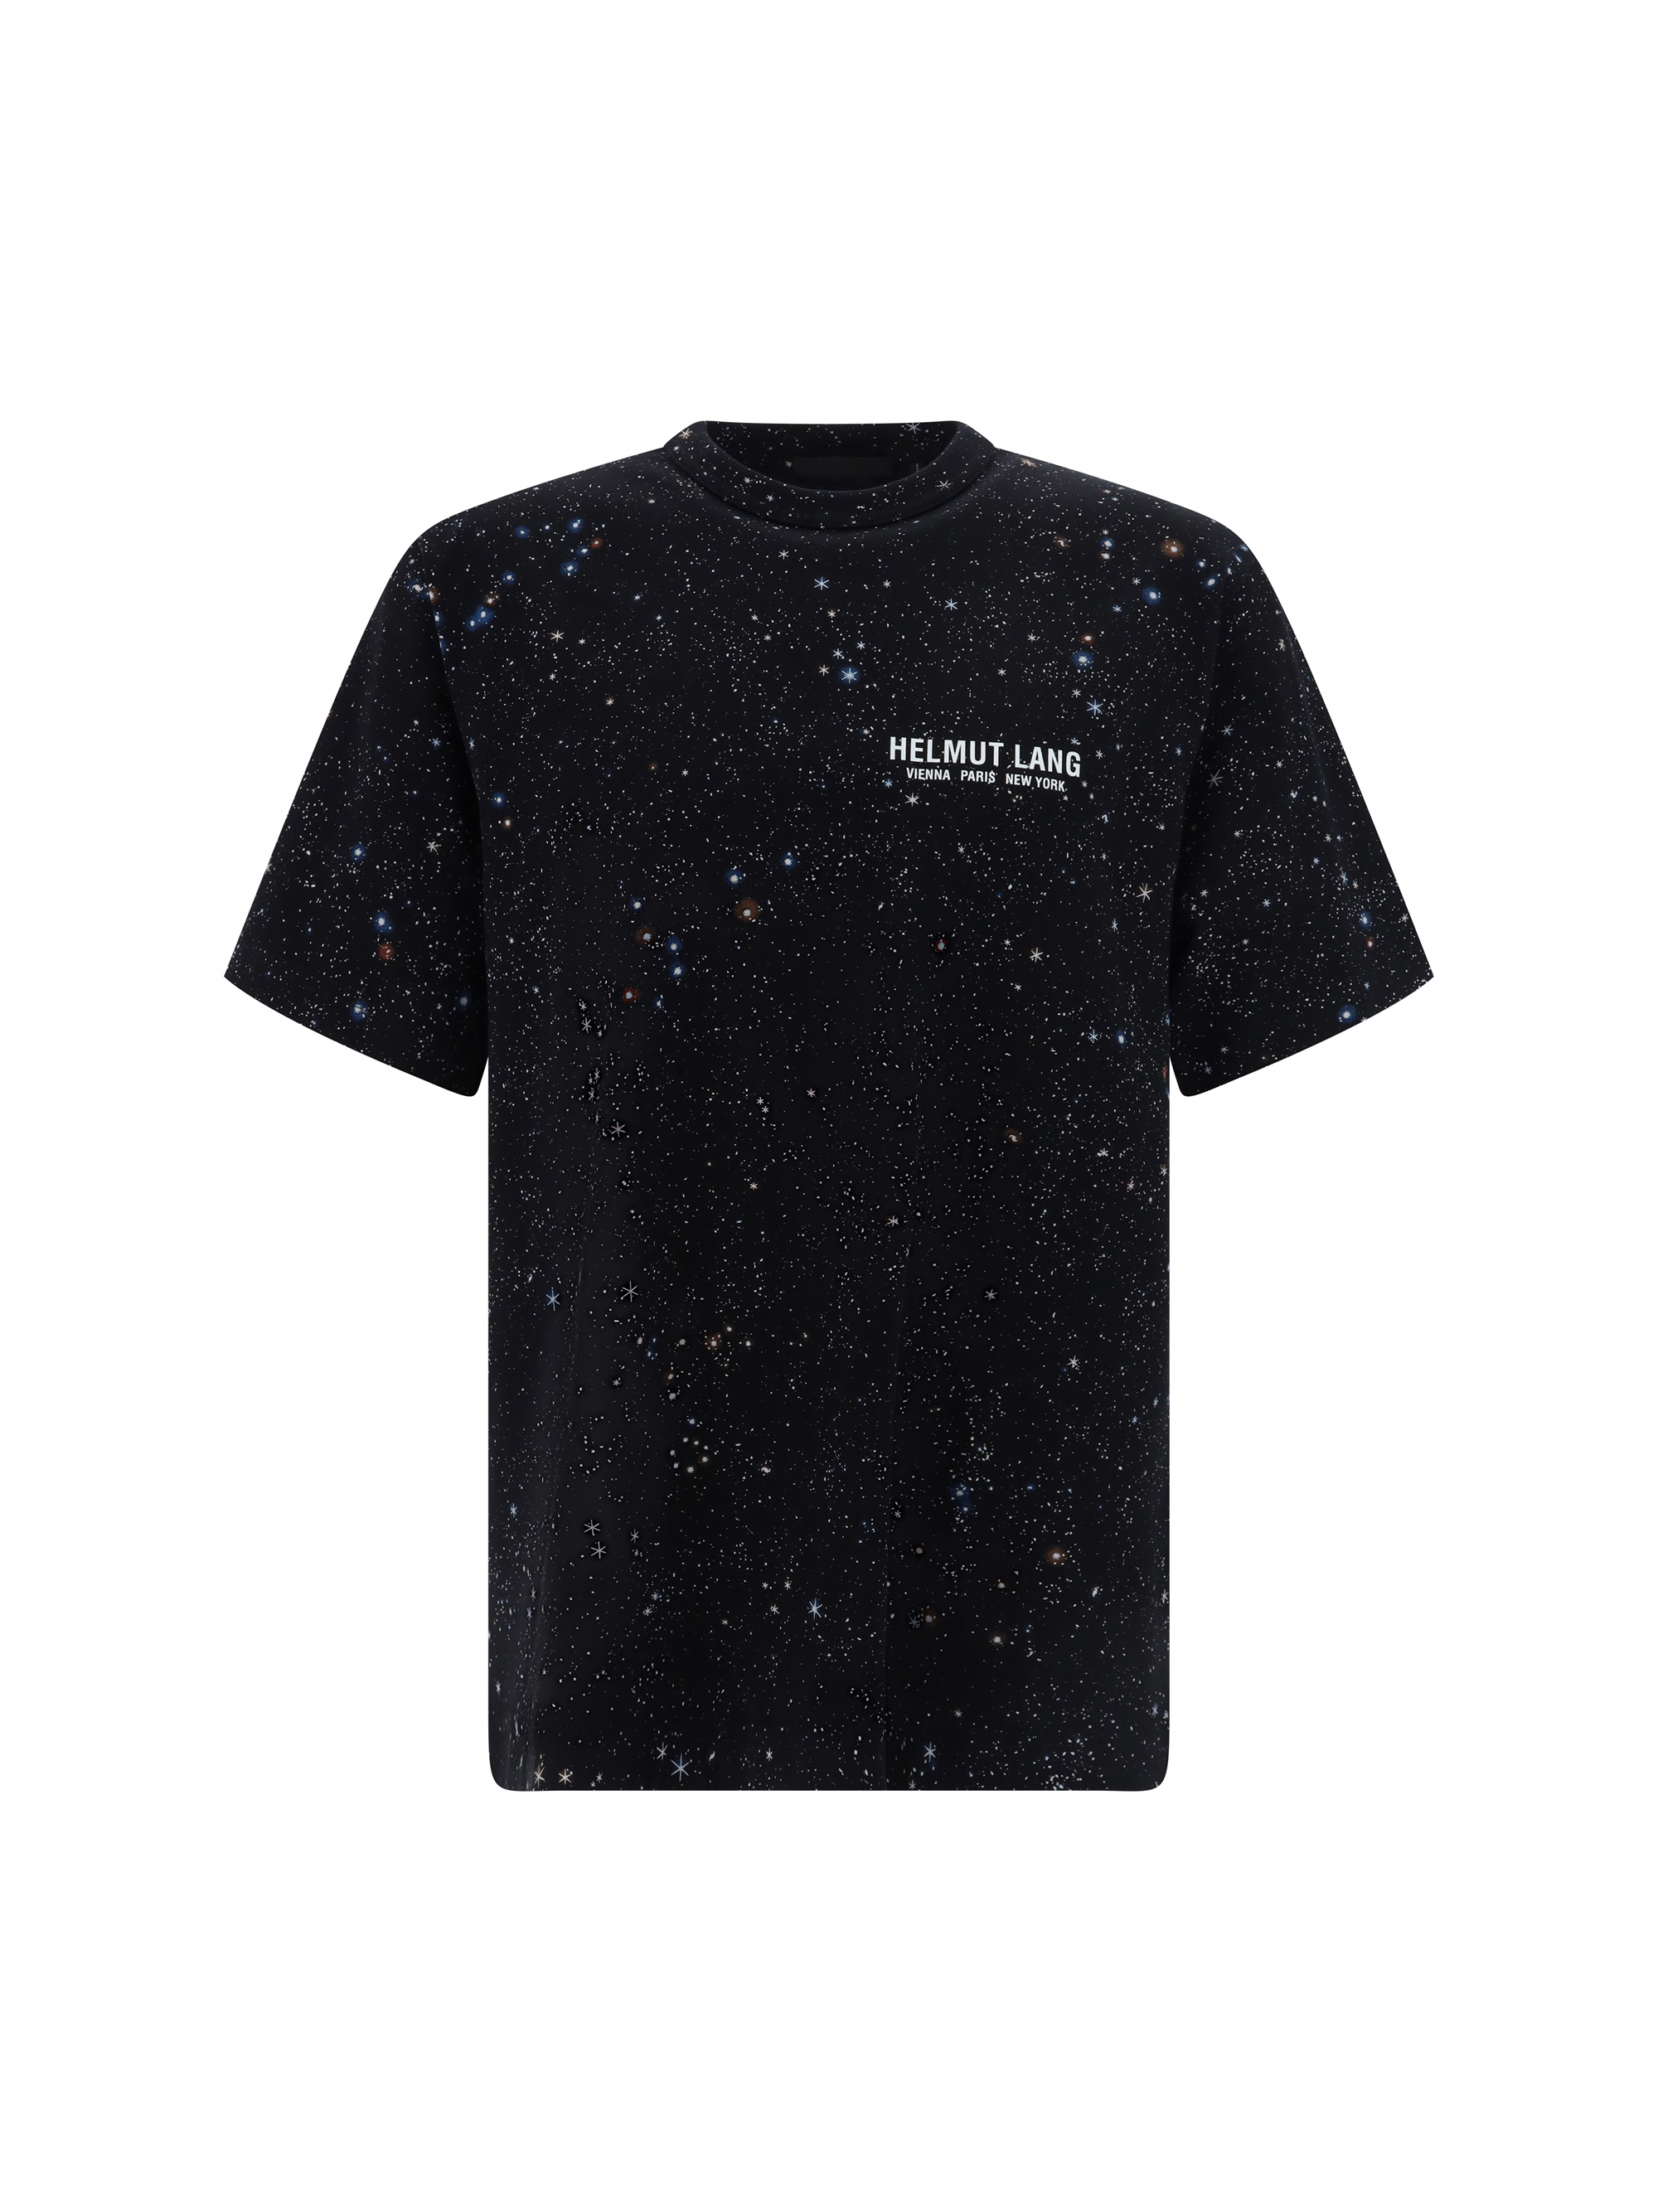 helmut lang - space t-shirt